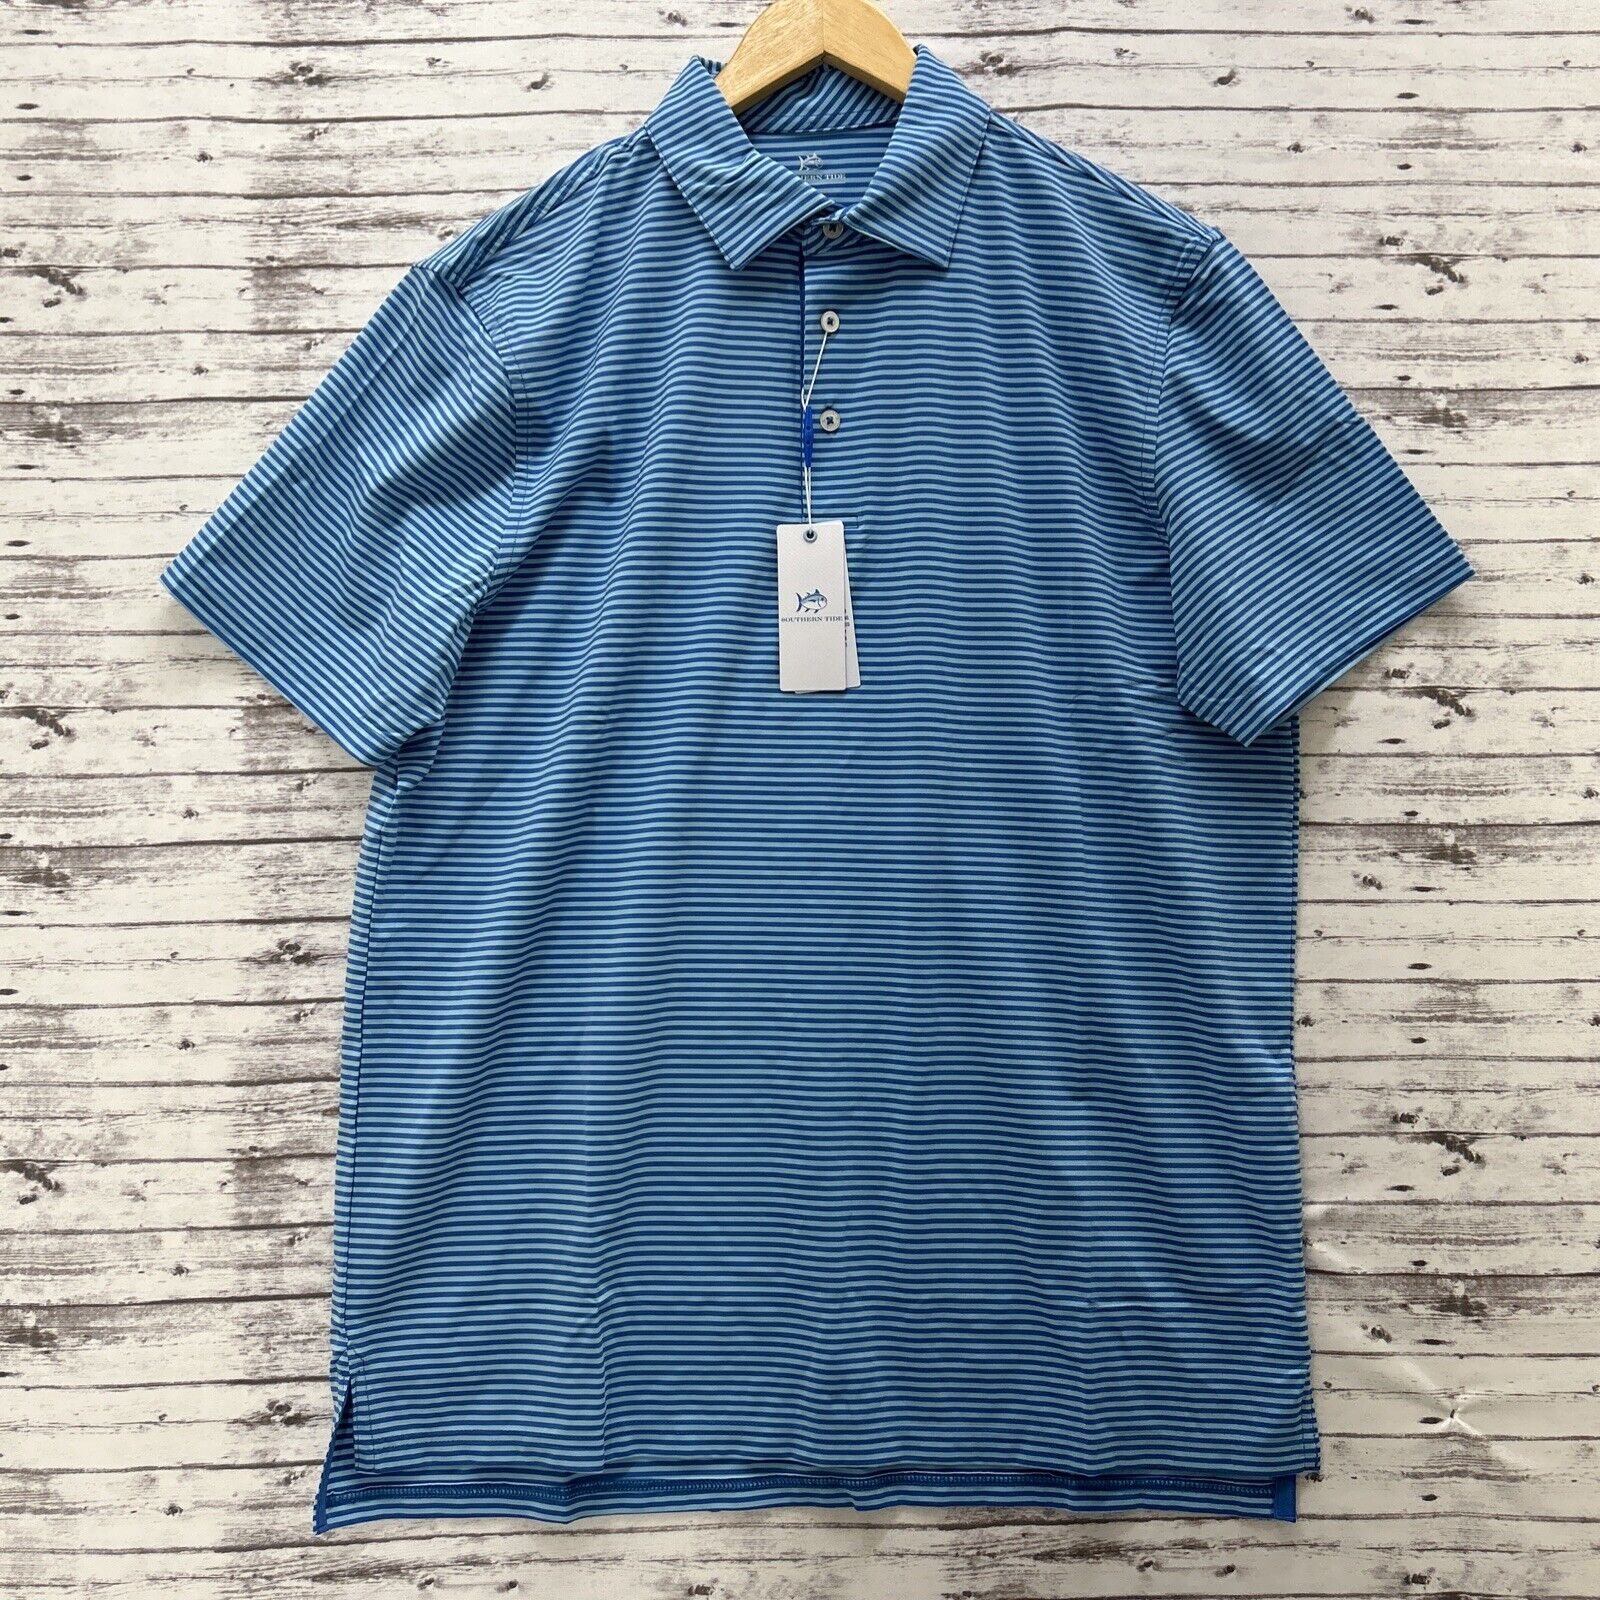 Southern Tide Brrr Performance Polo Shirt Men\'s Large Blue Golf Striped Stretch